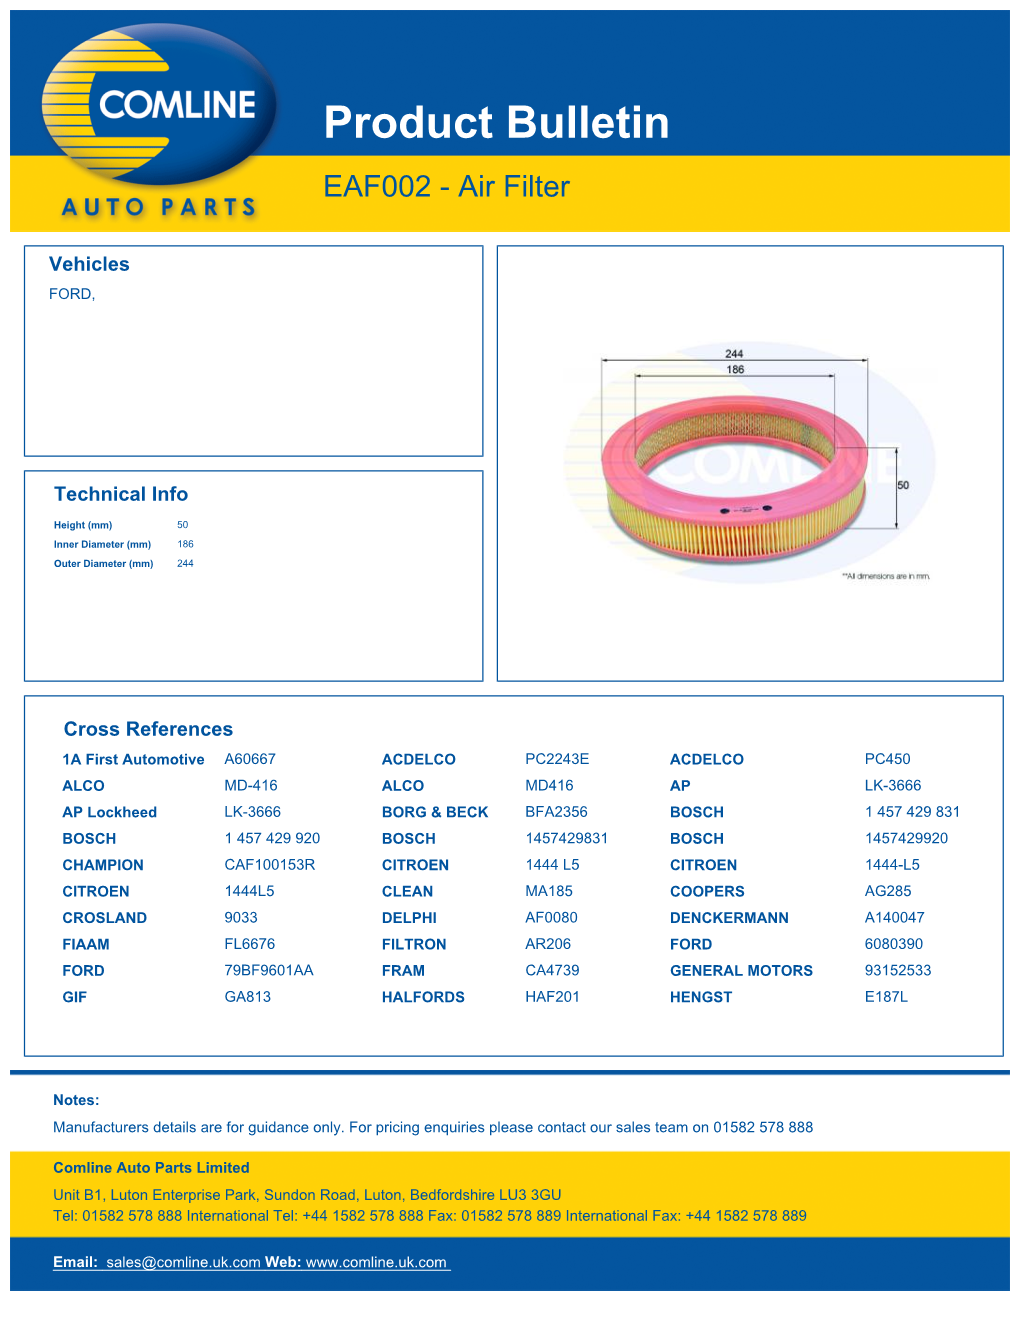 Product Bulletin EAF002 - Air Filter